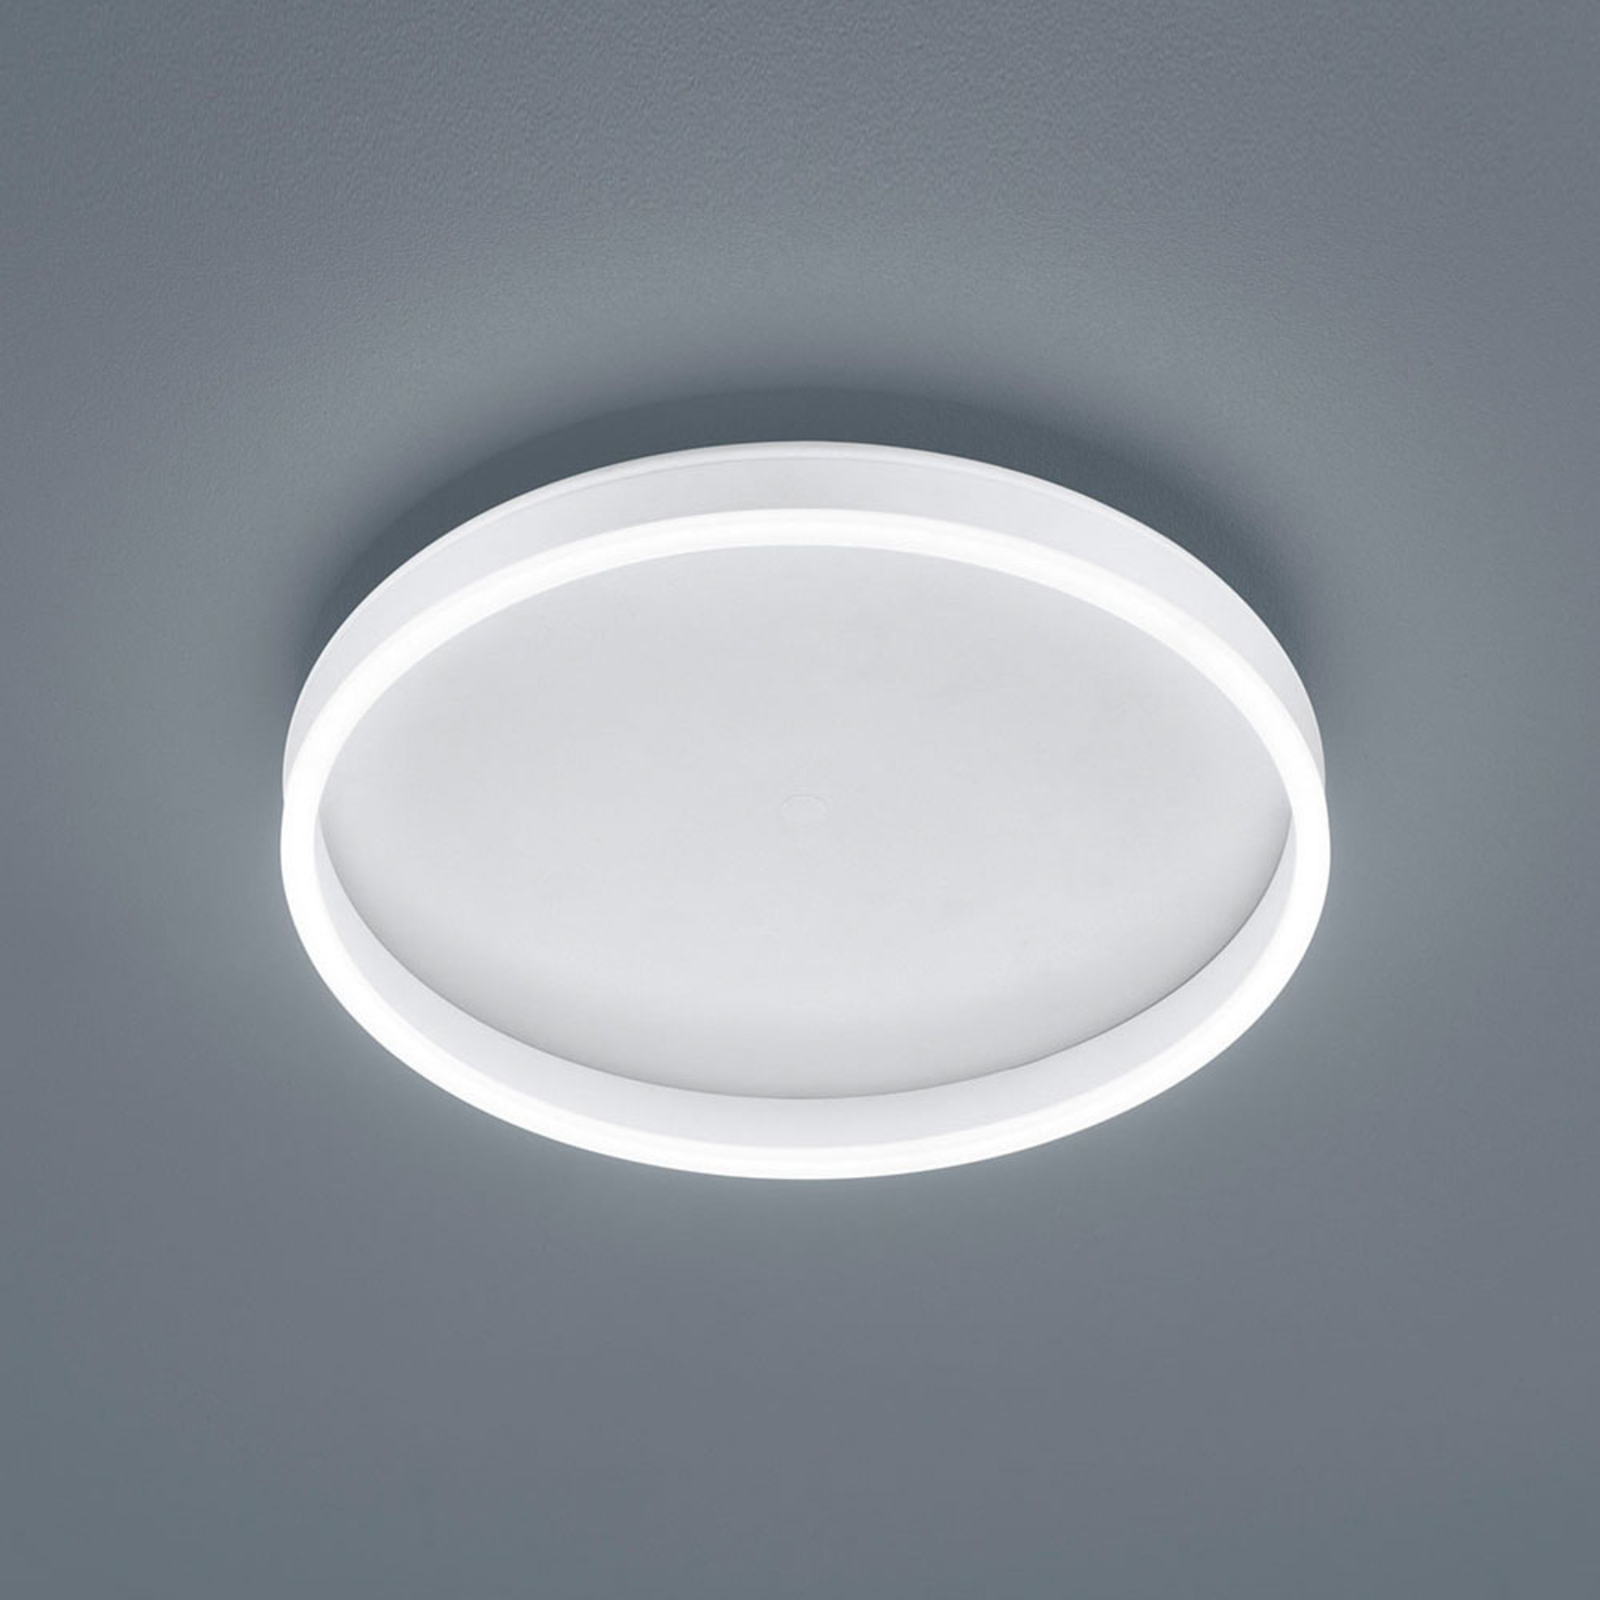 Helestra Sona lampa sufitowa LED Ø40cm biała